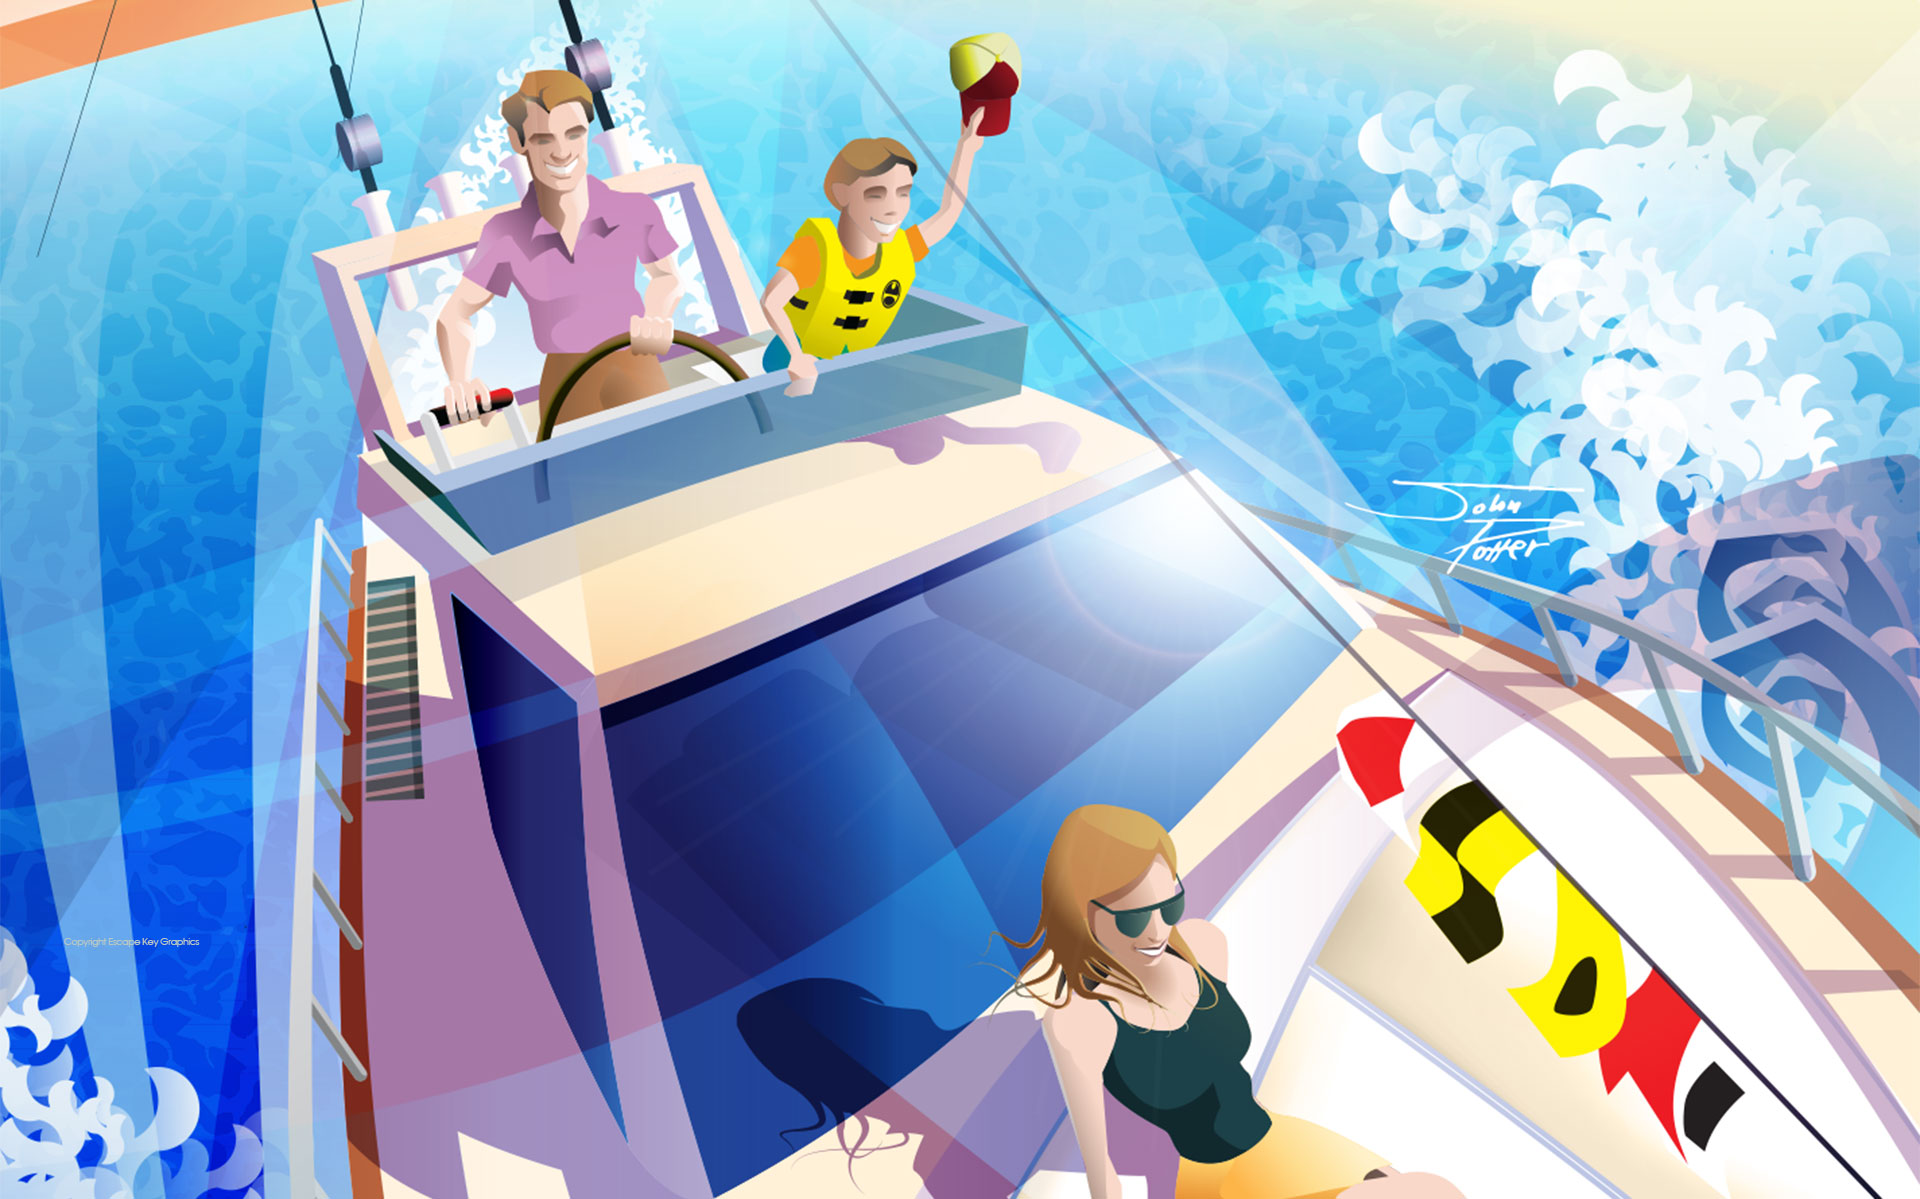 Boat Show Illustration for FLIBS 2014